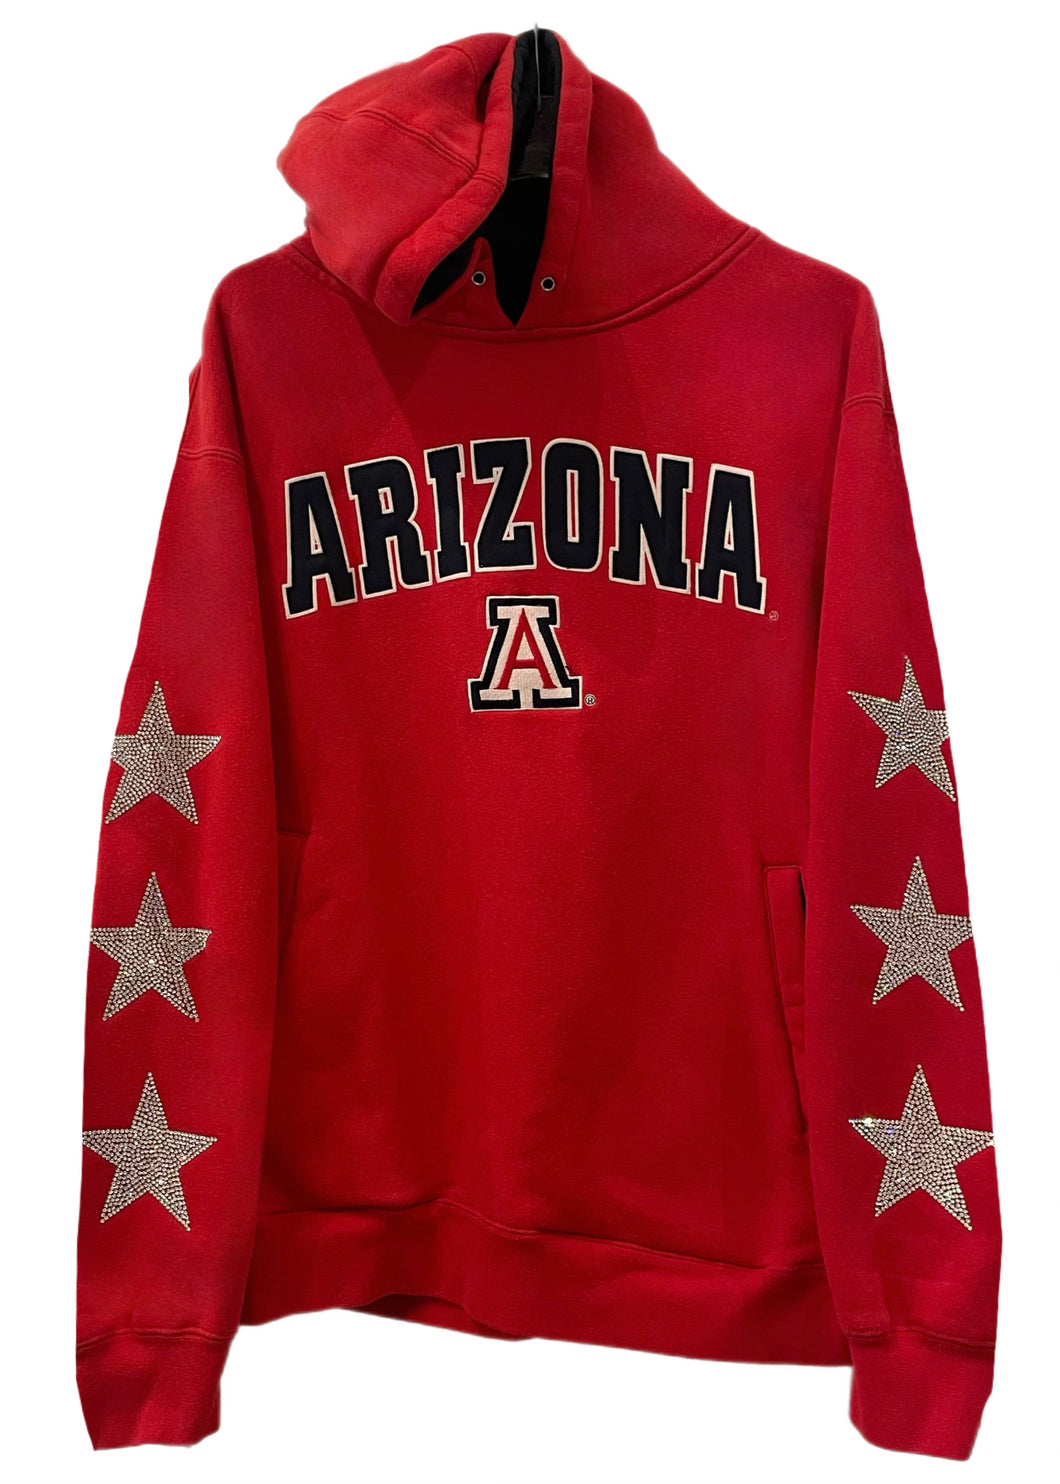 University of Arizona, One of a KIND Vintage Hoodie with Three Crystal Star Design